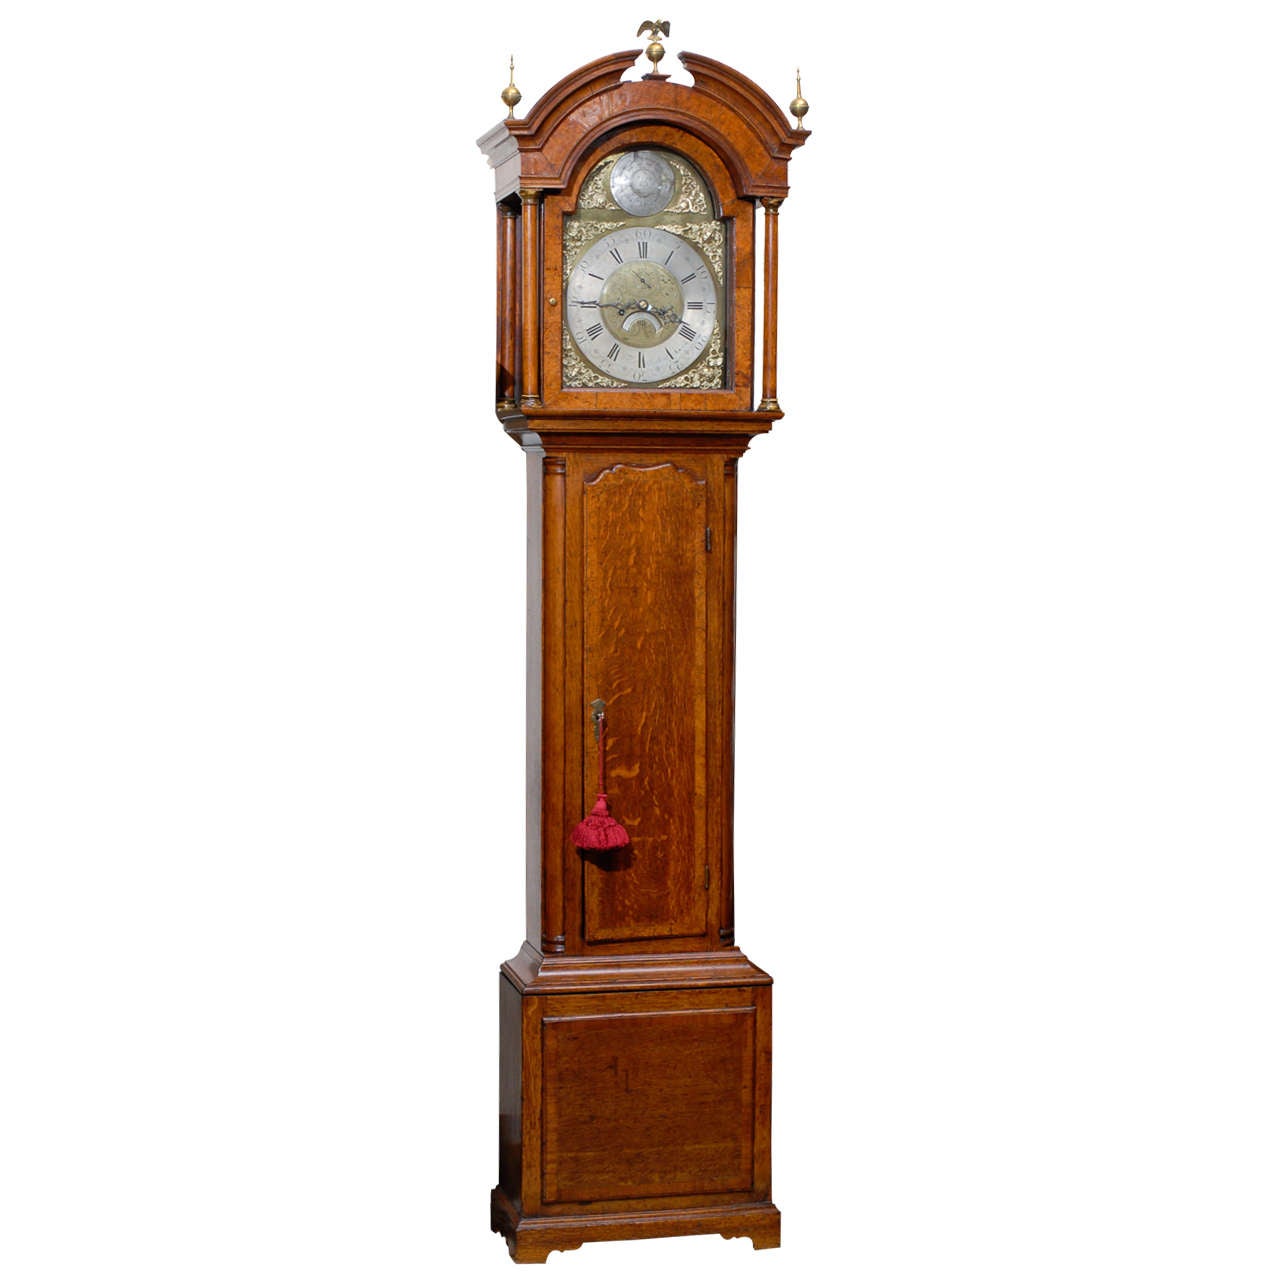 18th Century English Oak Tall Case Clock, Signed "Thomas Radford, Leeds"